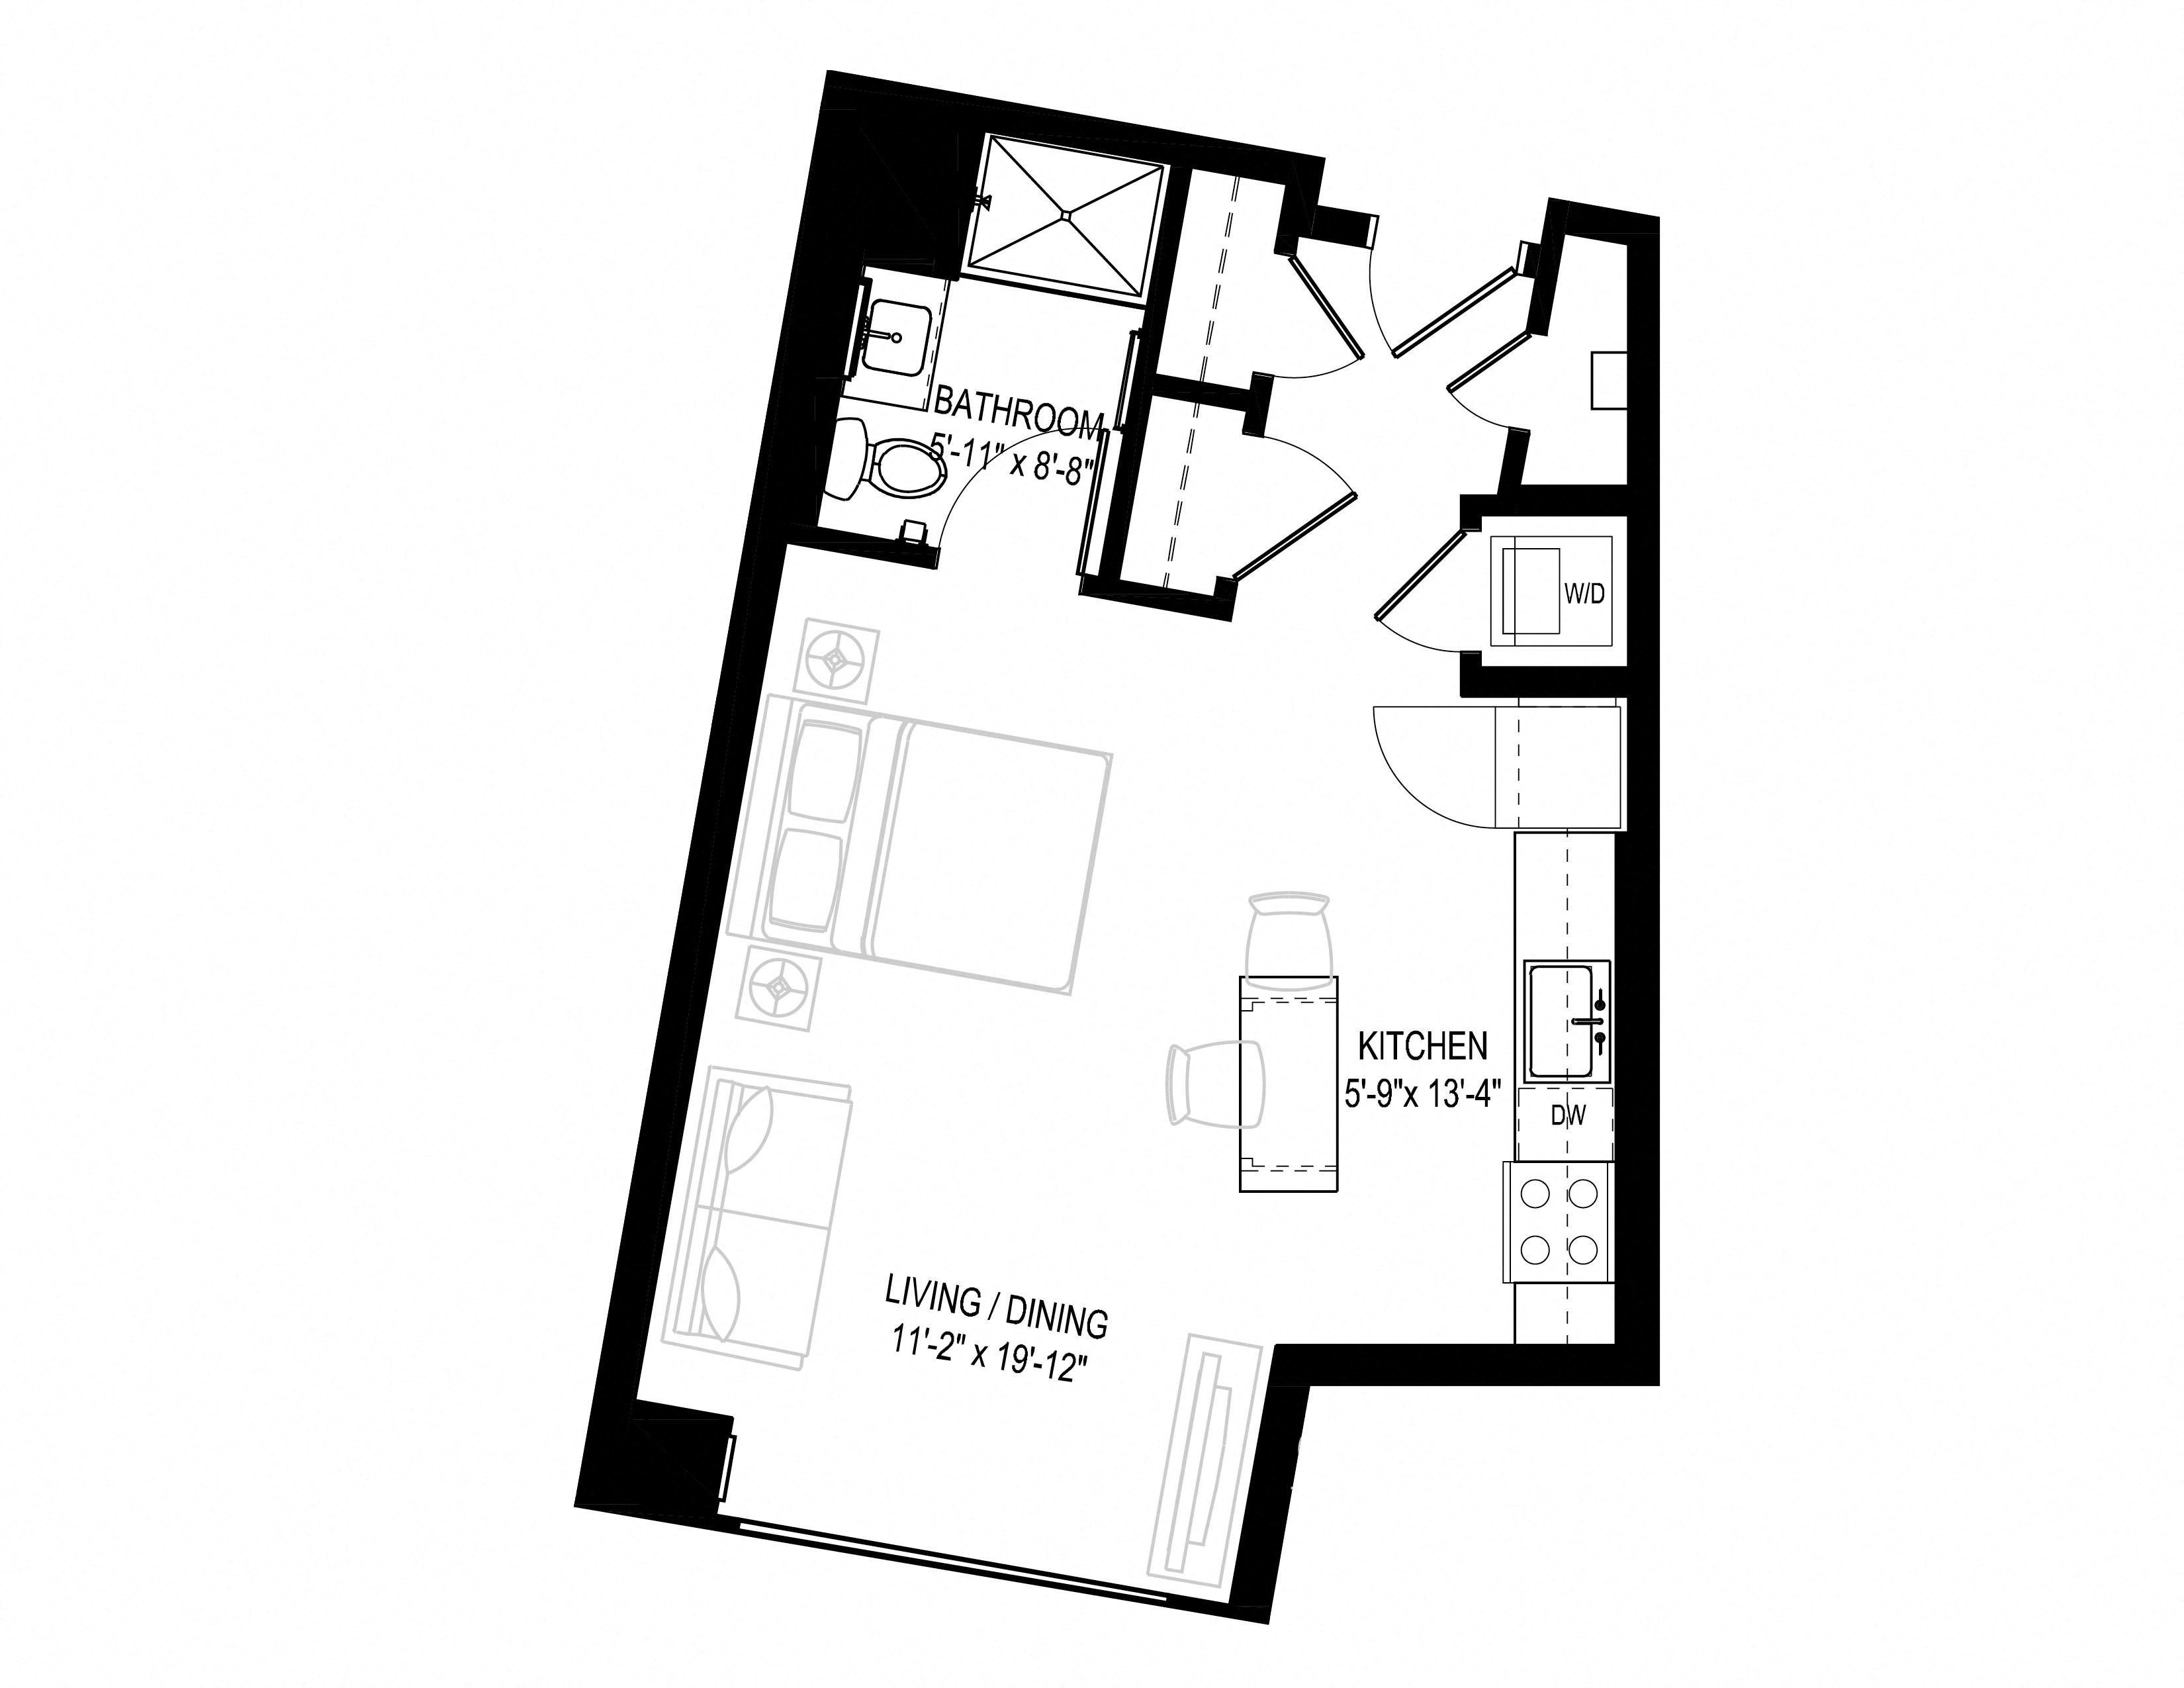 Floorplan image of 1-422